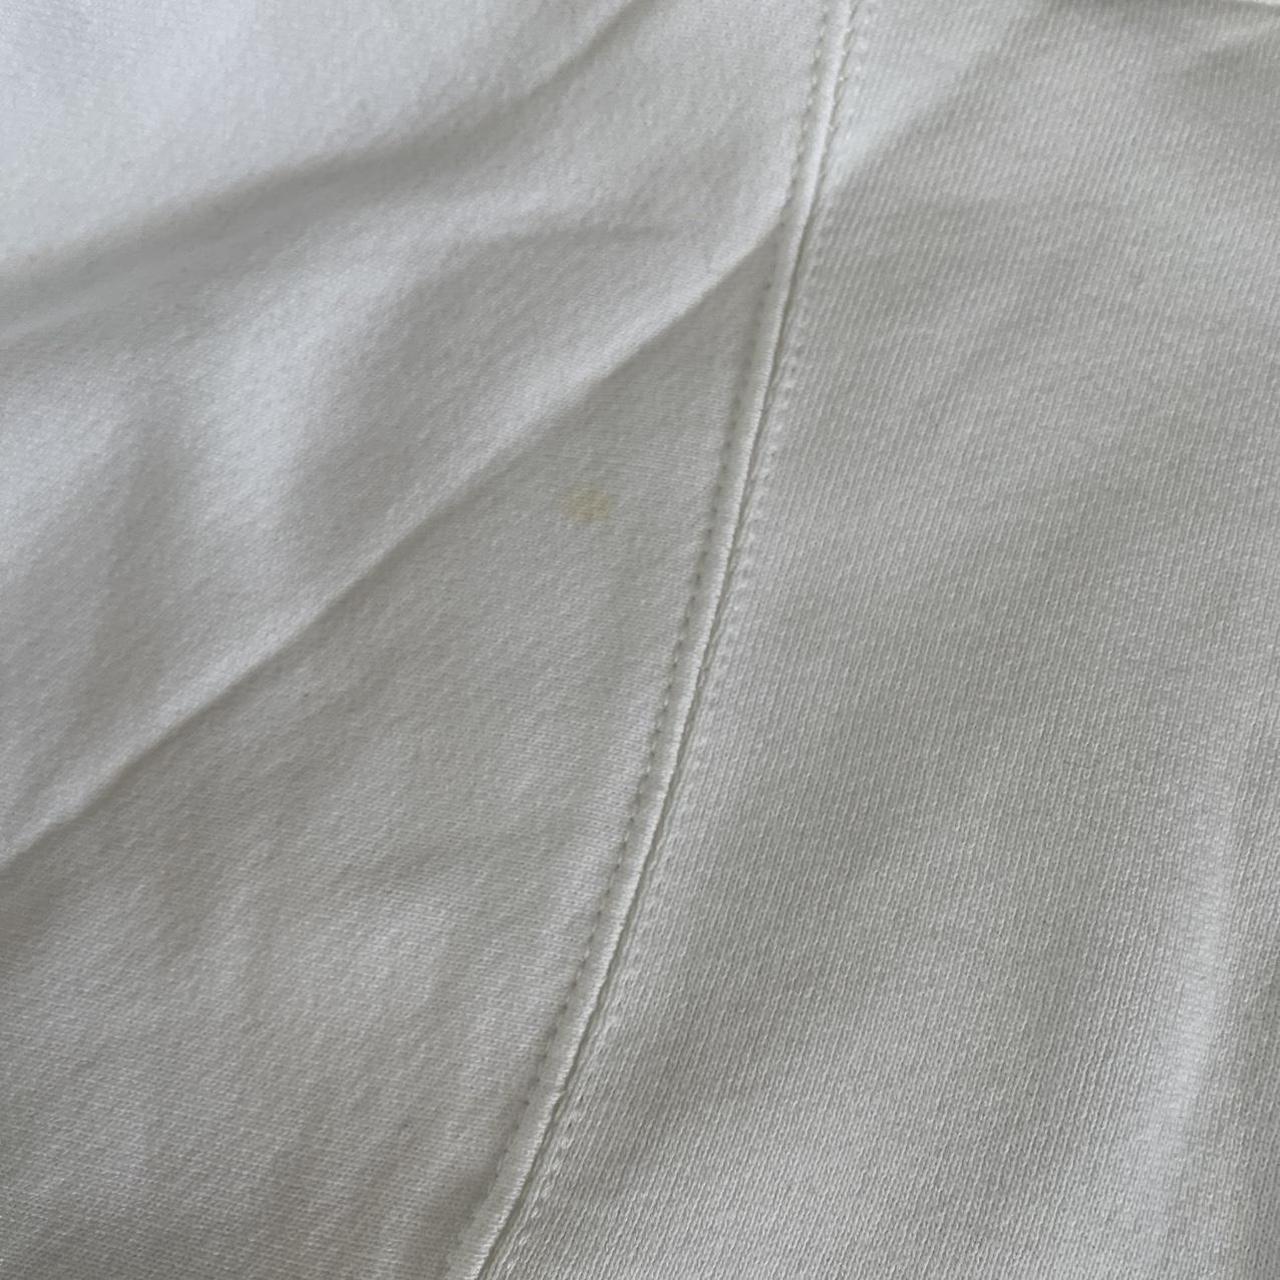 Acme Clothing Men's White and Grey Sweatshirt (6)